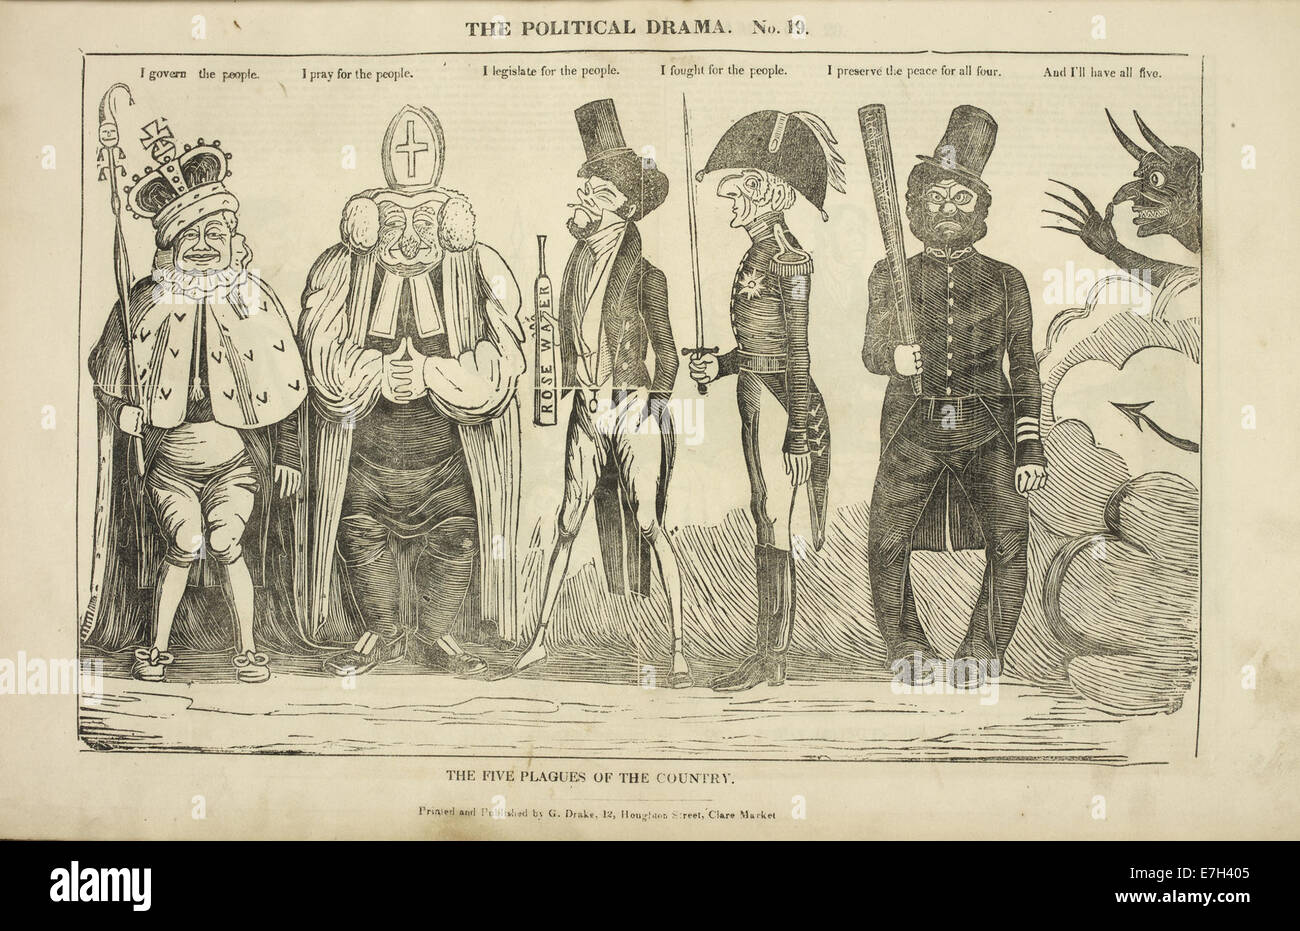 Die fünf Plagen des Landes - Grant-Polit-Drama (1834-1835), Nr. 19 - BL Stockfoto